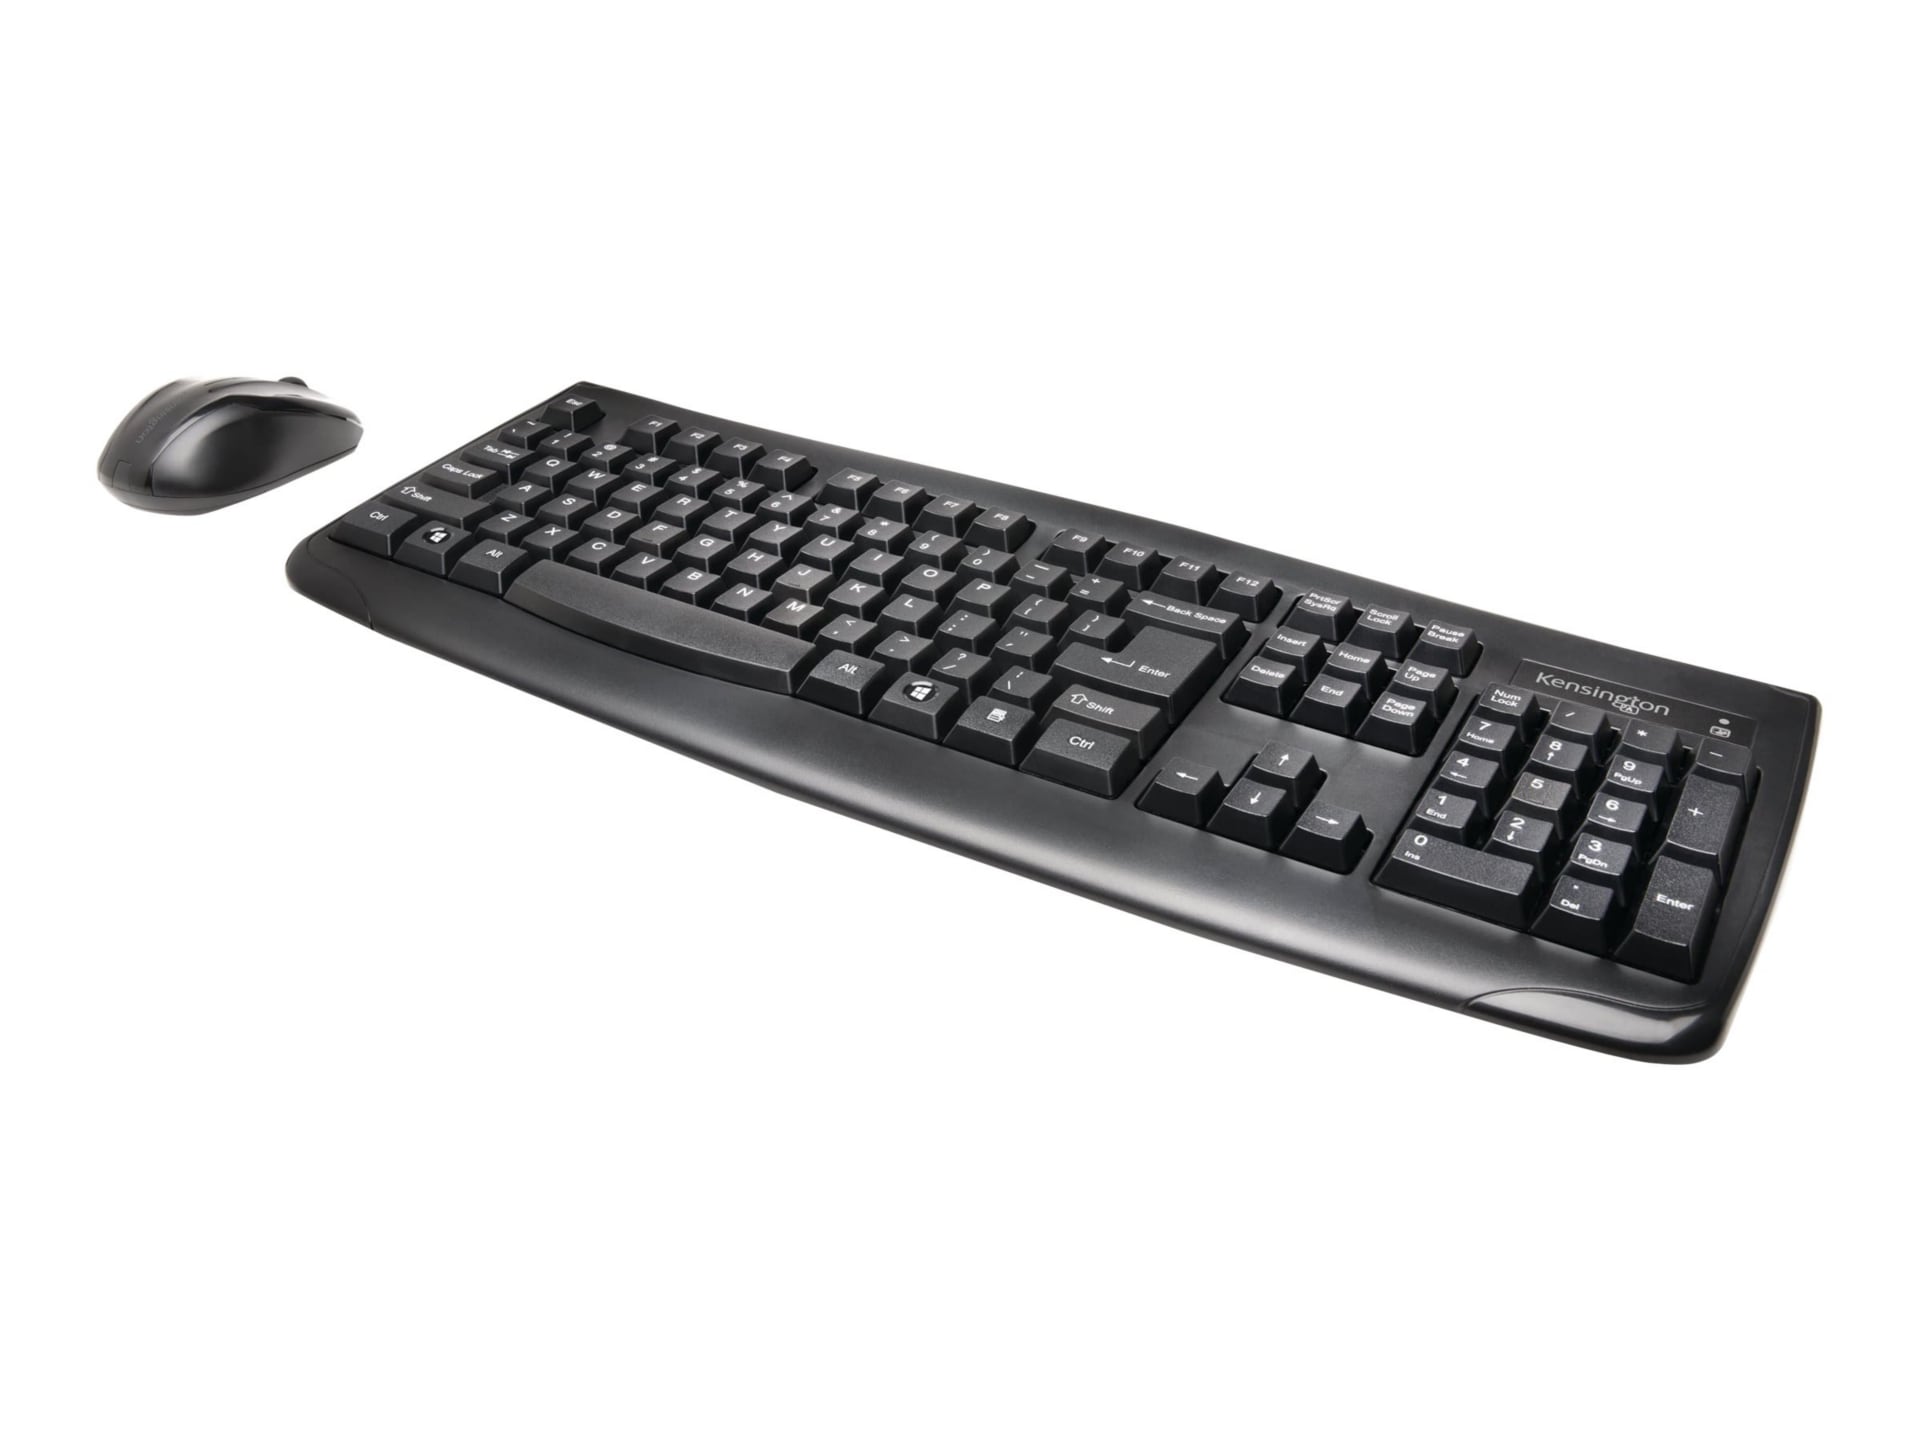 Kensington Keyboard for Life Wireless Desktop Set - keyboard and mouse set Input Device